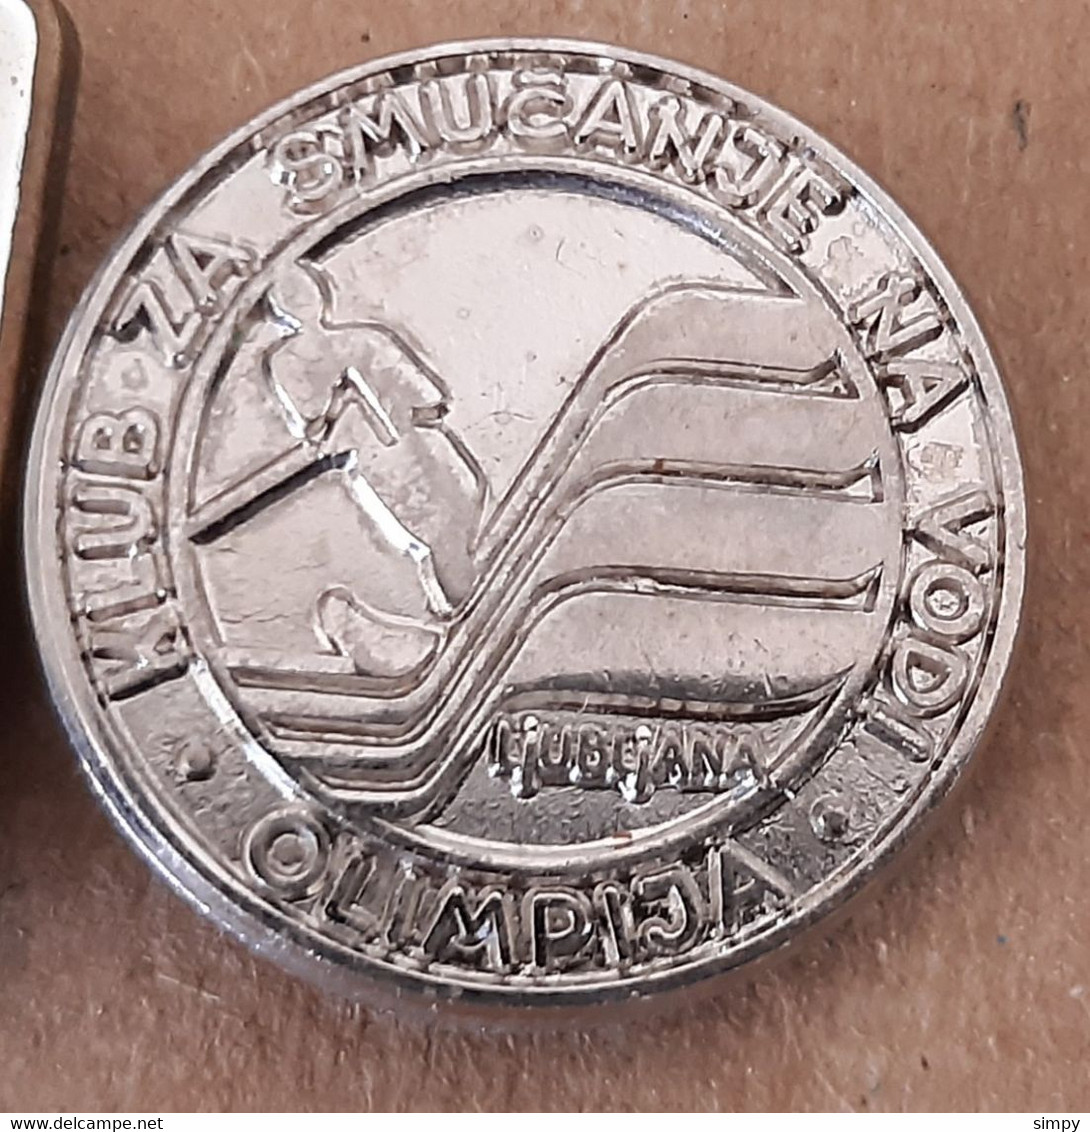 Water Skiing Club Olimpija Ljubljana Vintage Slovenia Ex Yugoslavia Badge Pin - Ski Nautique